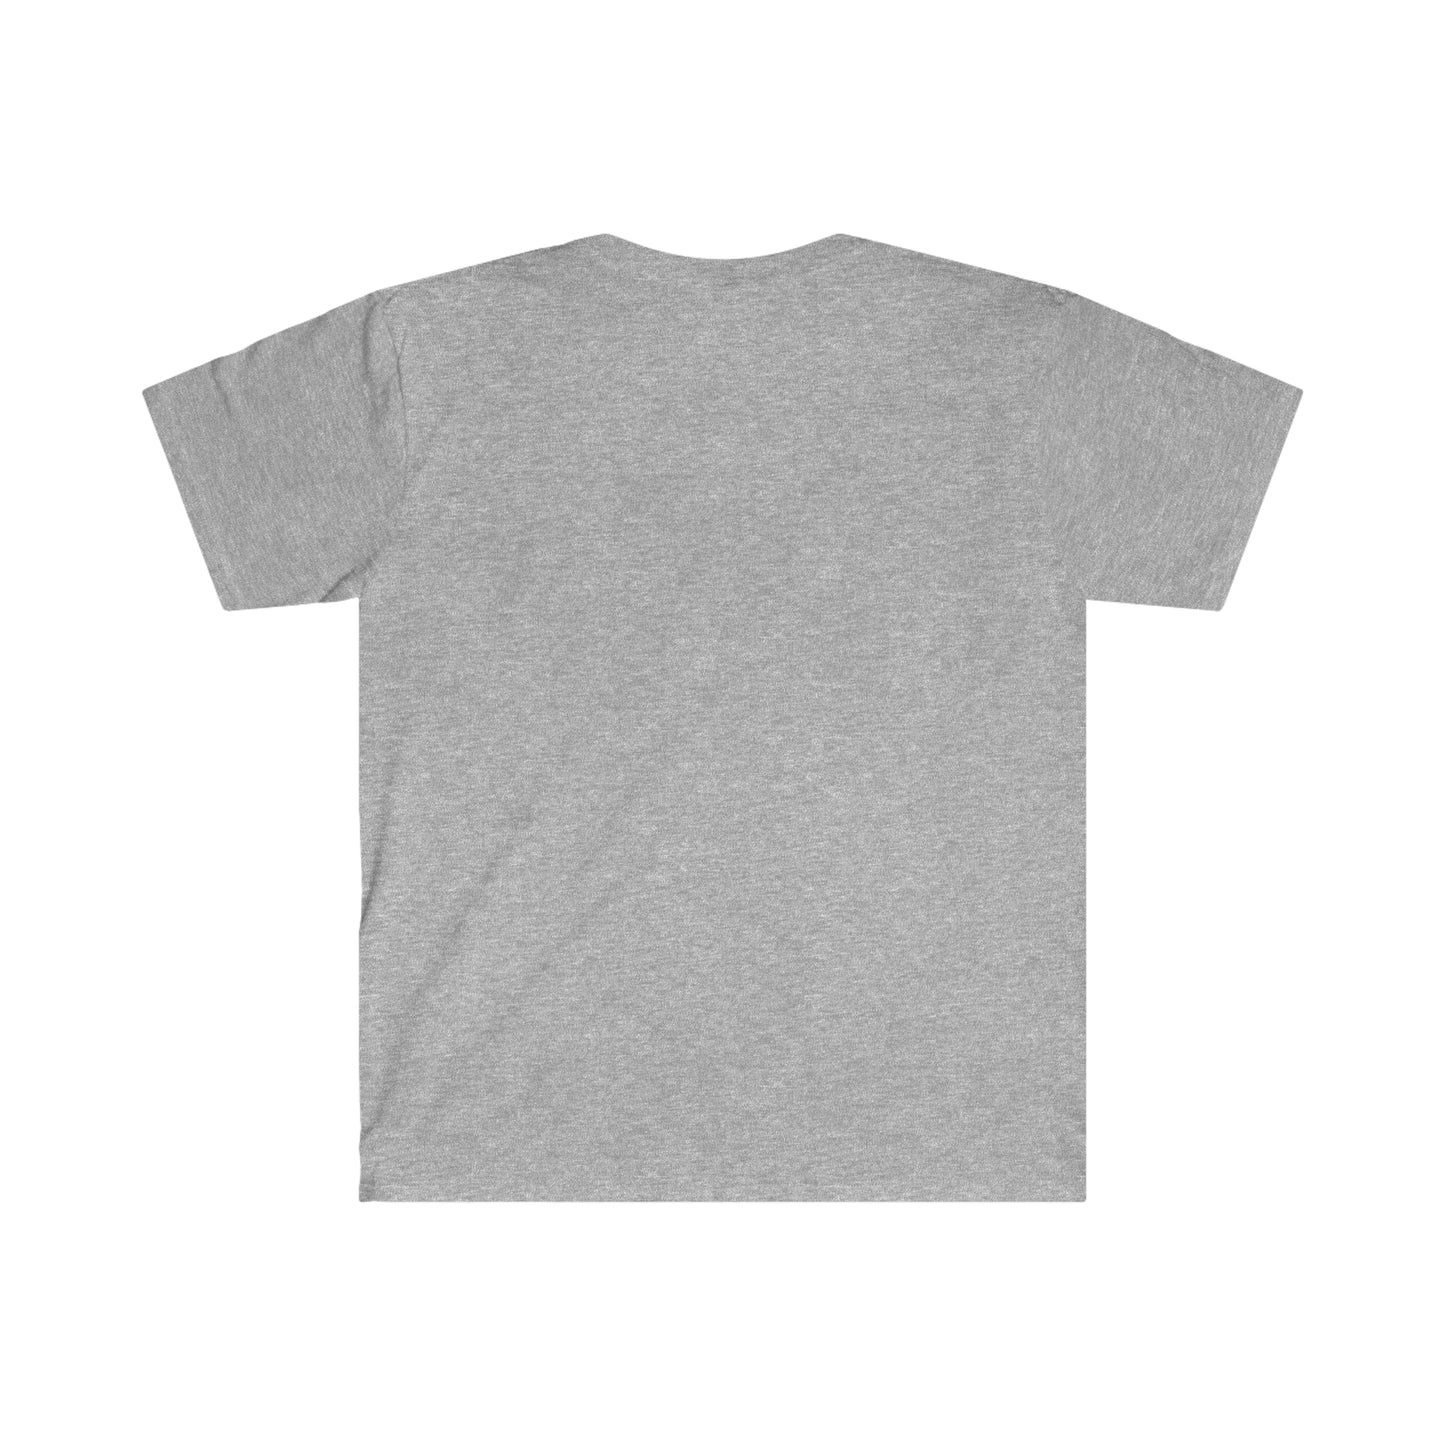 PRAY Unisex Softstyle T-Shirt